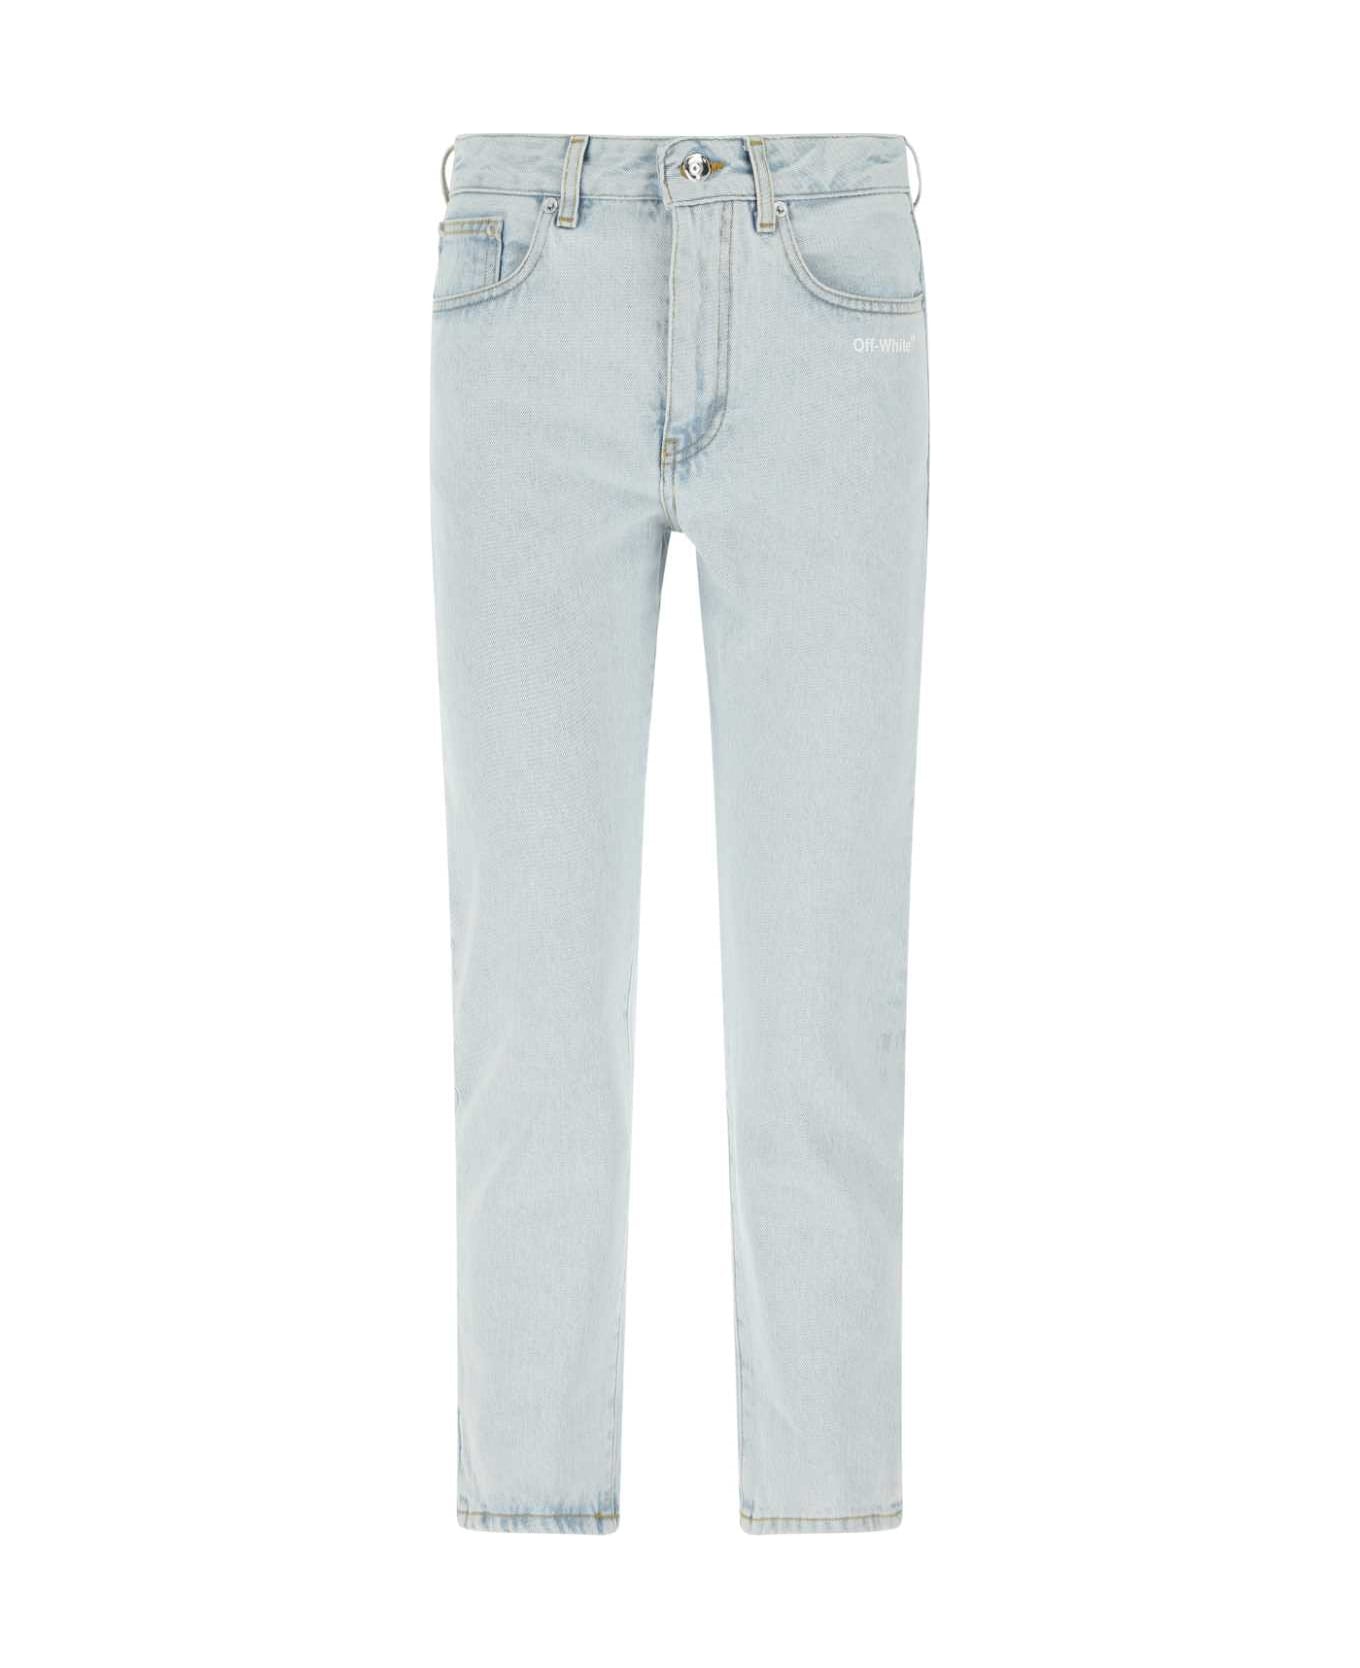 Off-White Denim Jeans - 4001 デニム